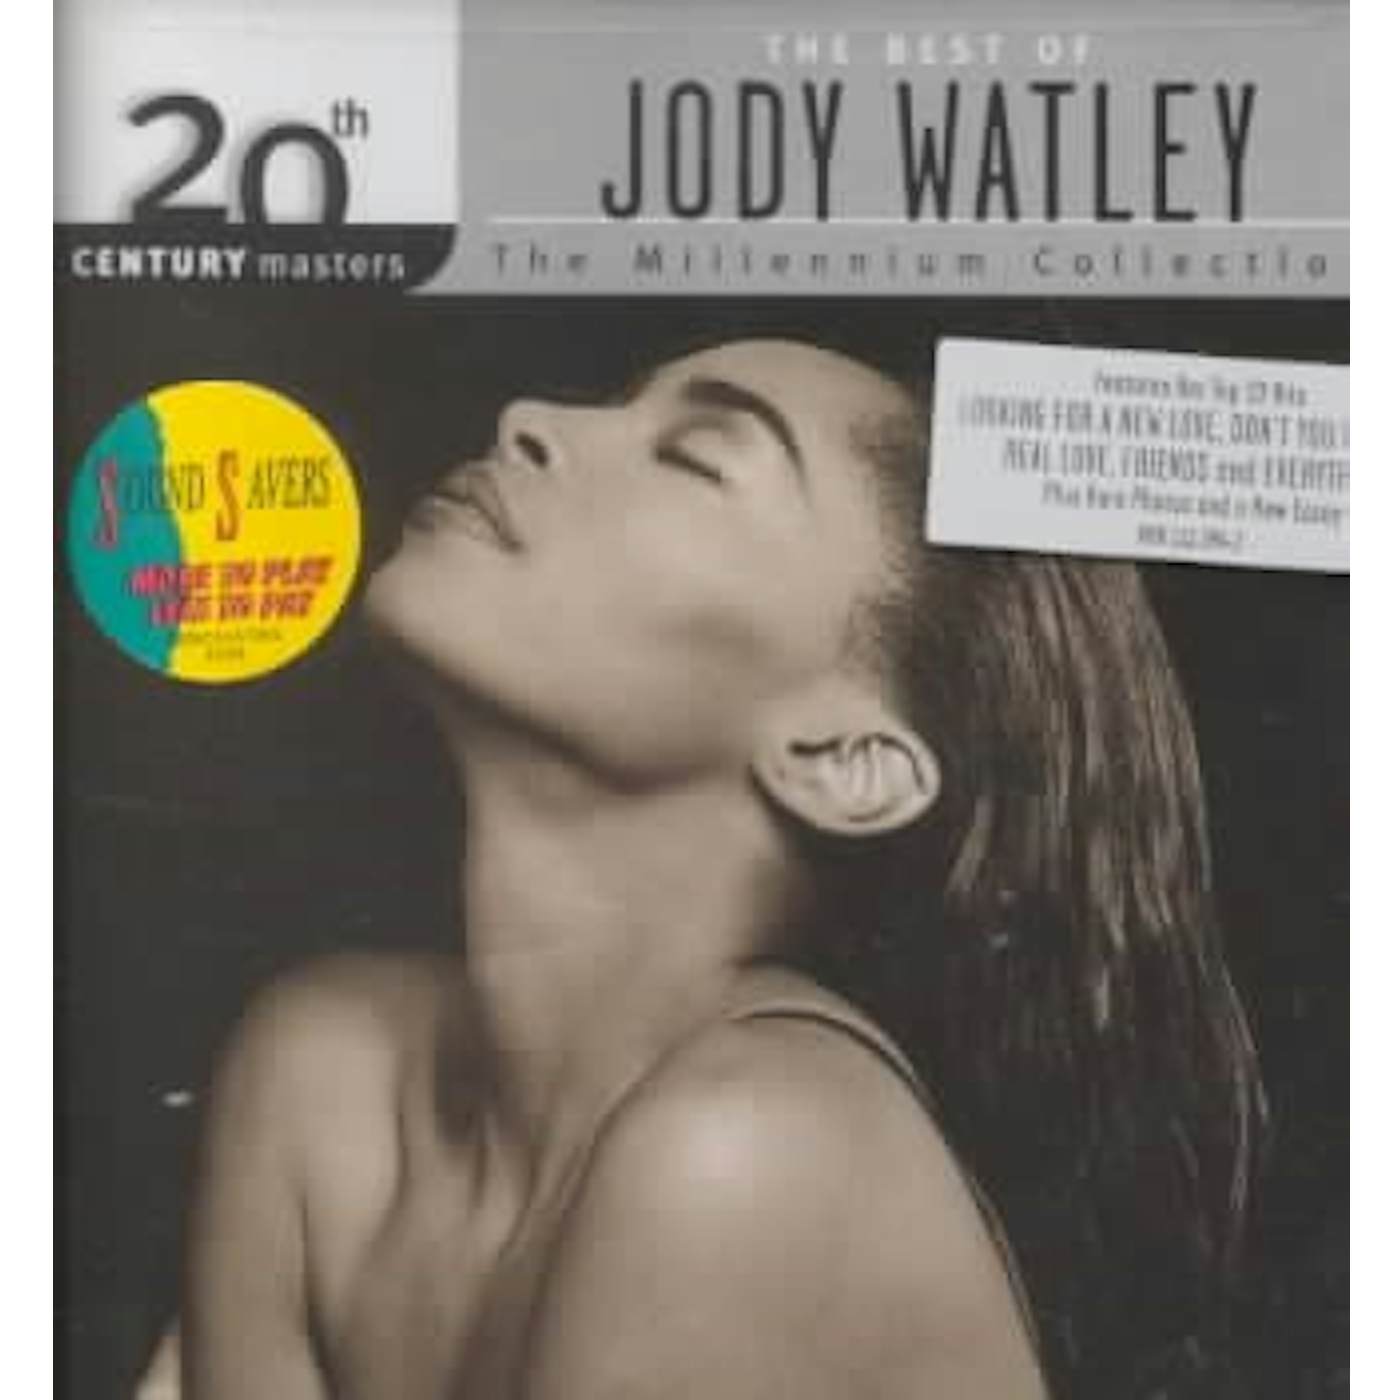 Jody Watley Millennium Collection - 20th Century Masters CD